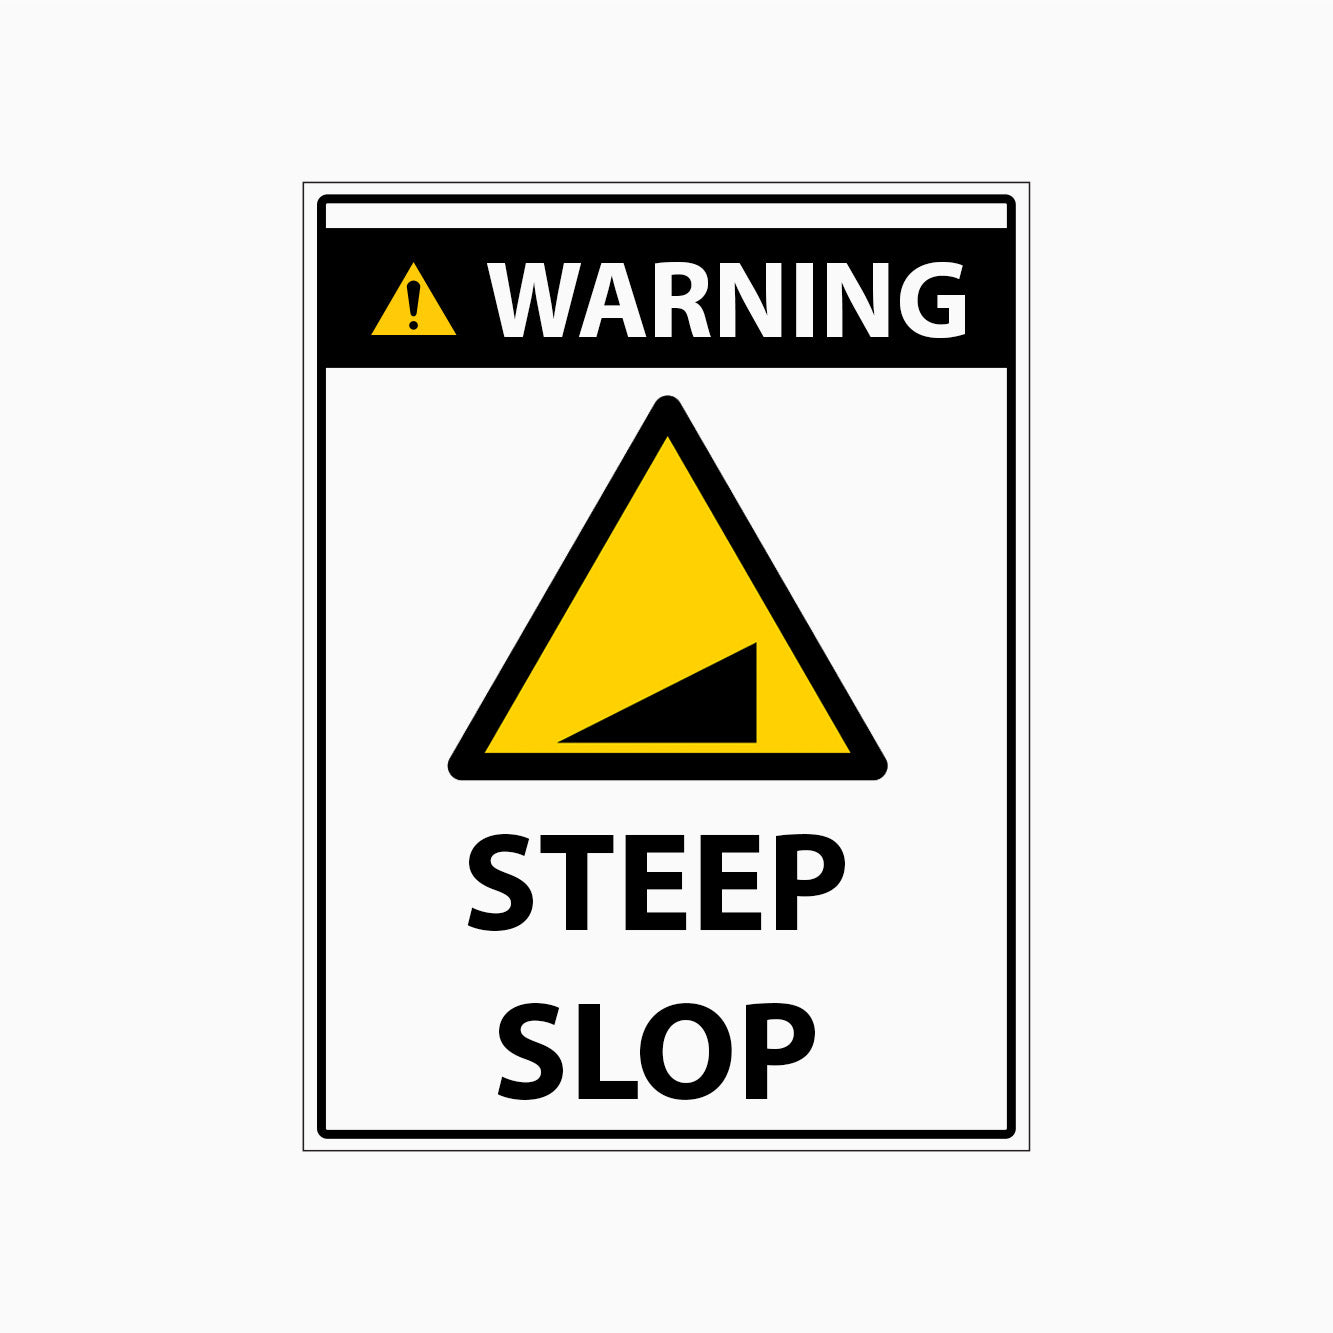 WARNING SIGN - STEEP SLOP SIGN